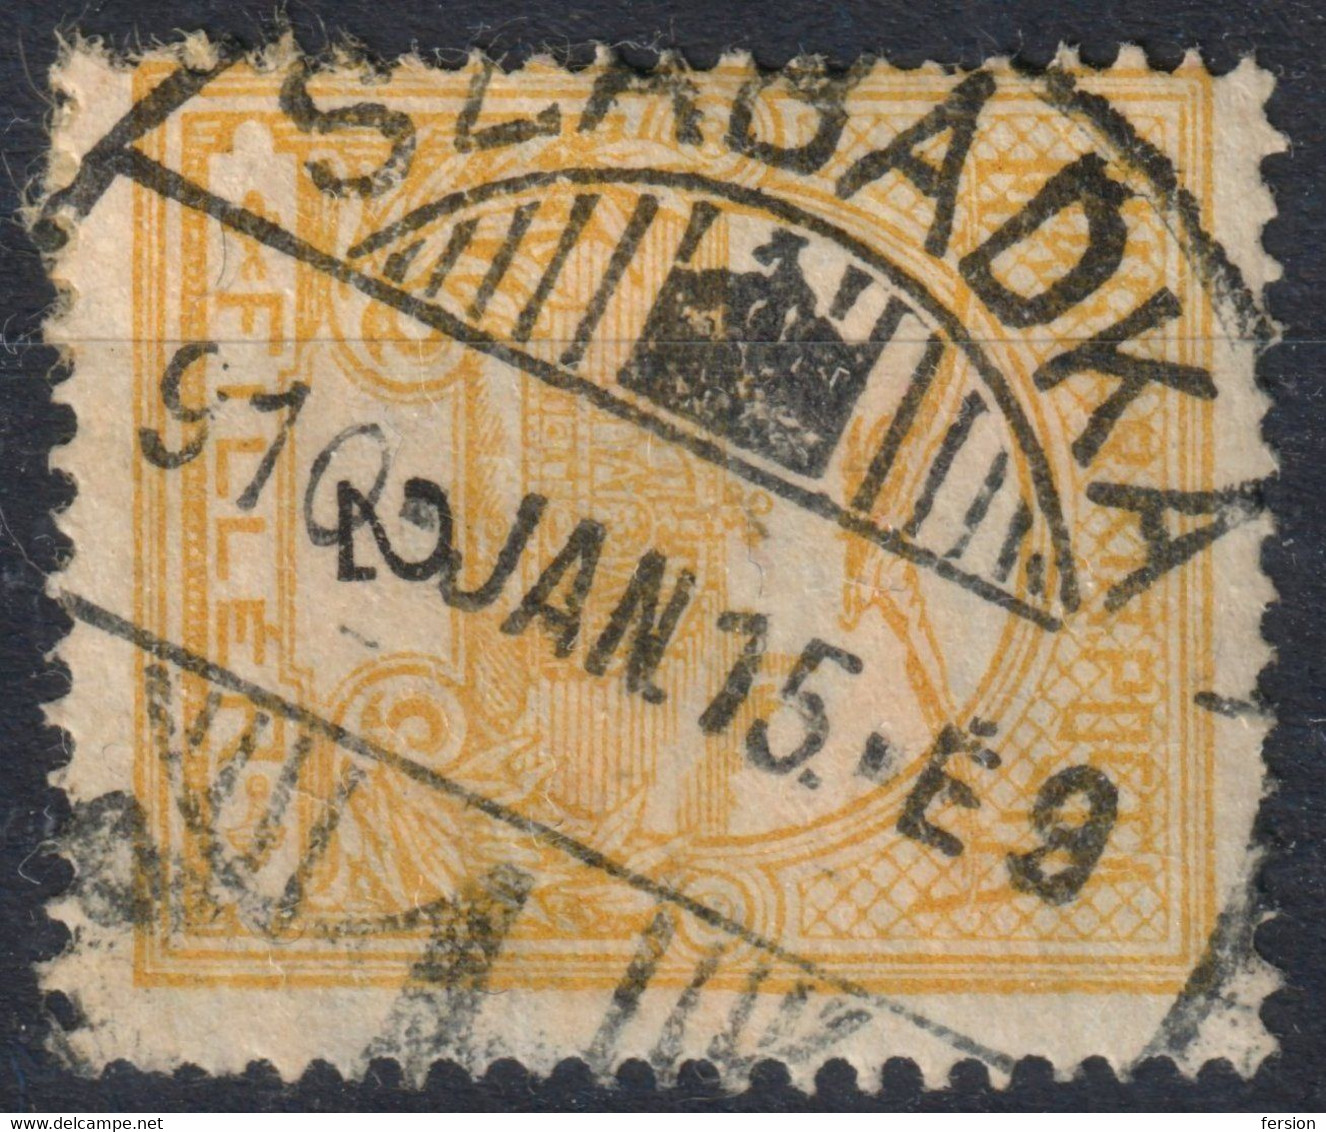 SZABADKA SUBOTICA Postmark TURUL Crown 1910 Hungary SERBIA Vojvodina SHS BACKA BÁCS BODROG County KuK 2 Fill - Prefilatelia